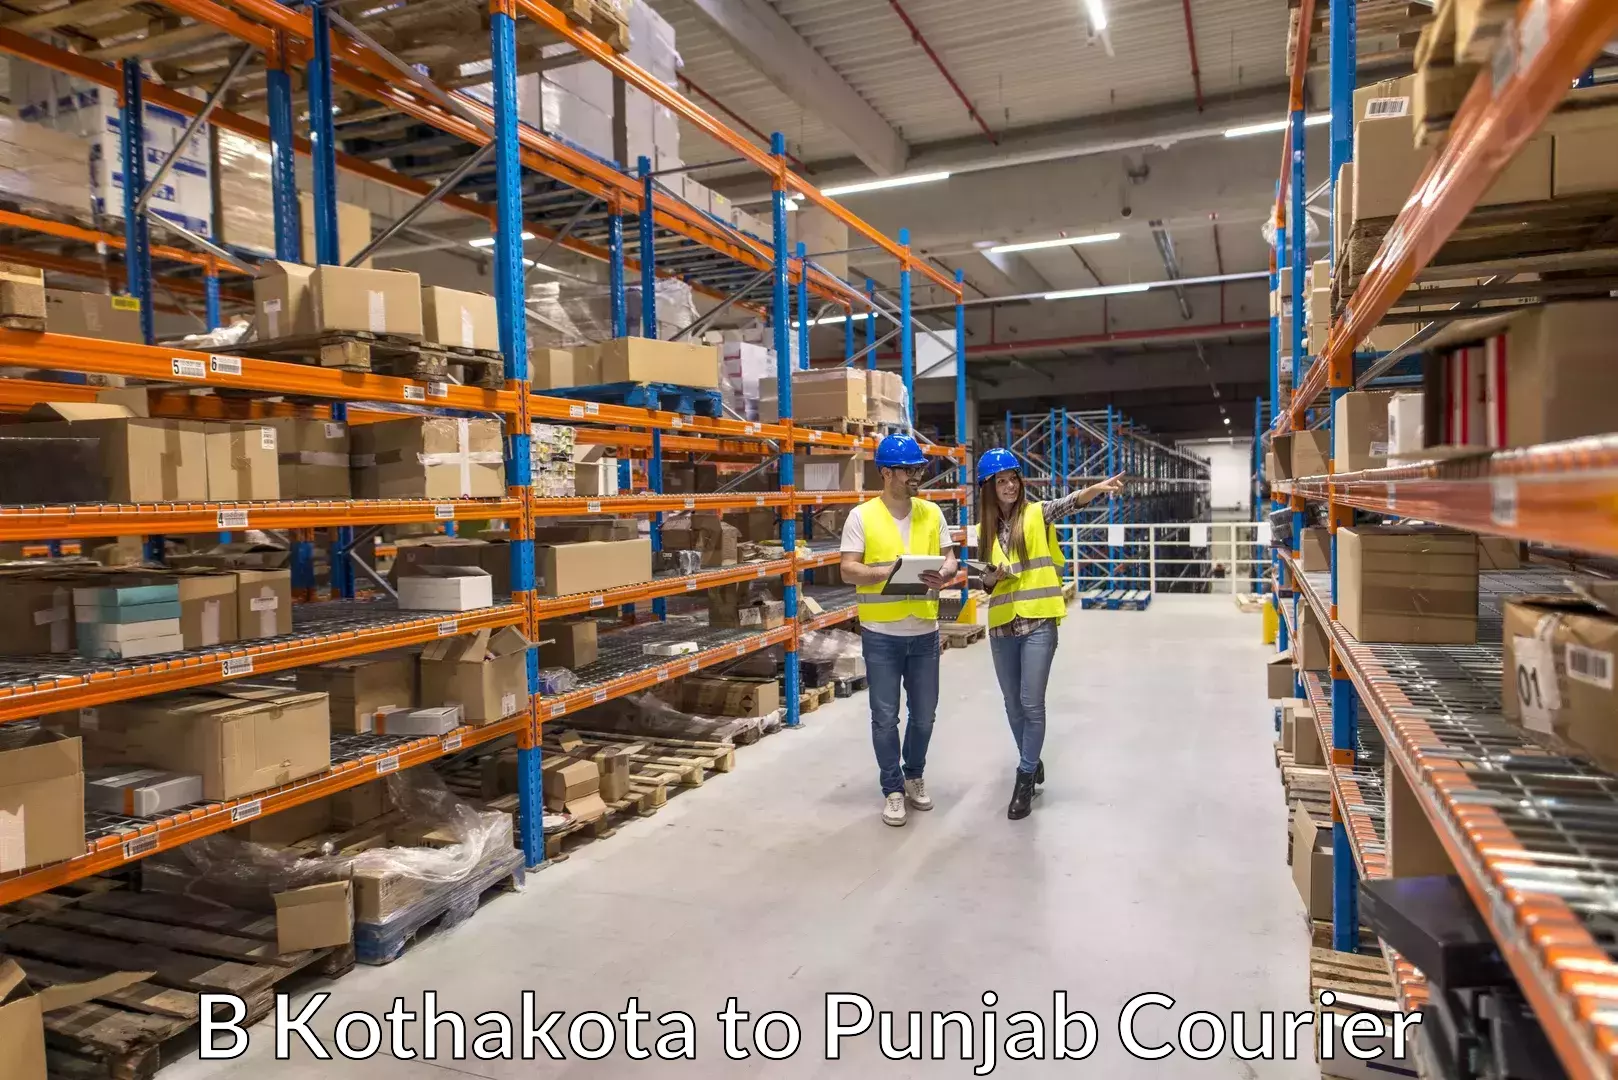 Furniture delivery service B Kothakota to Rajpura